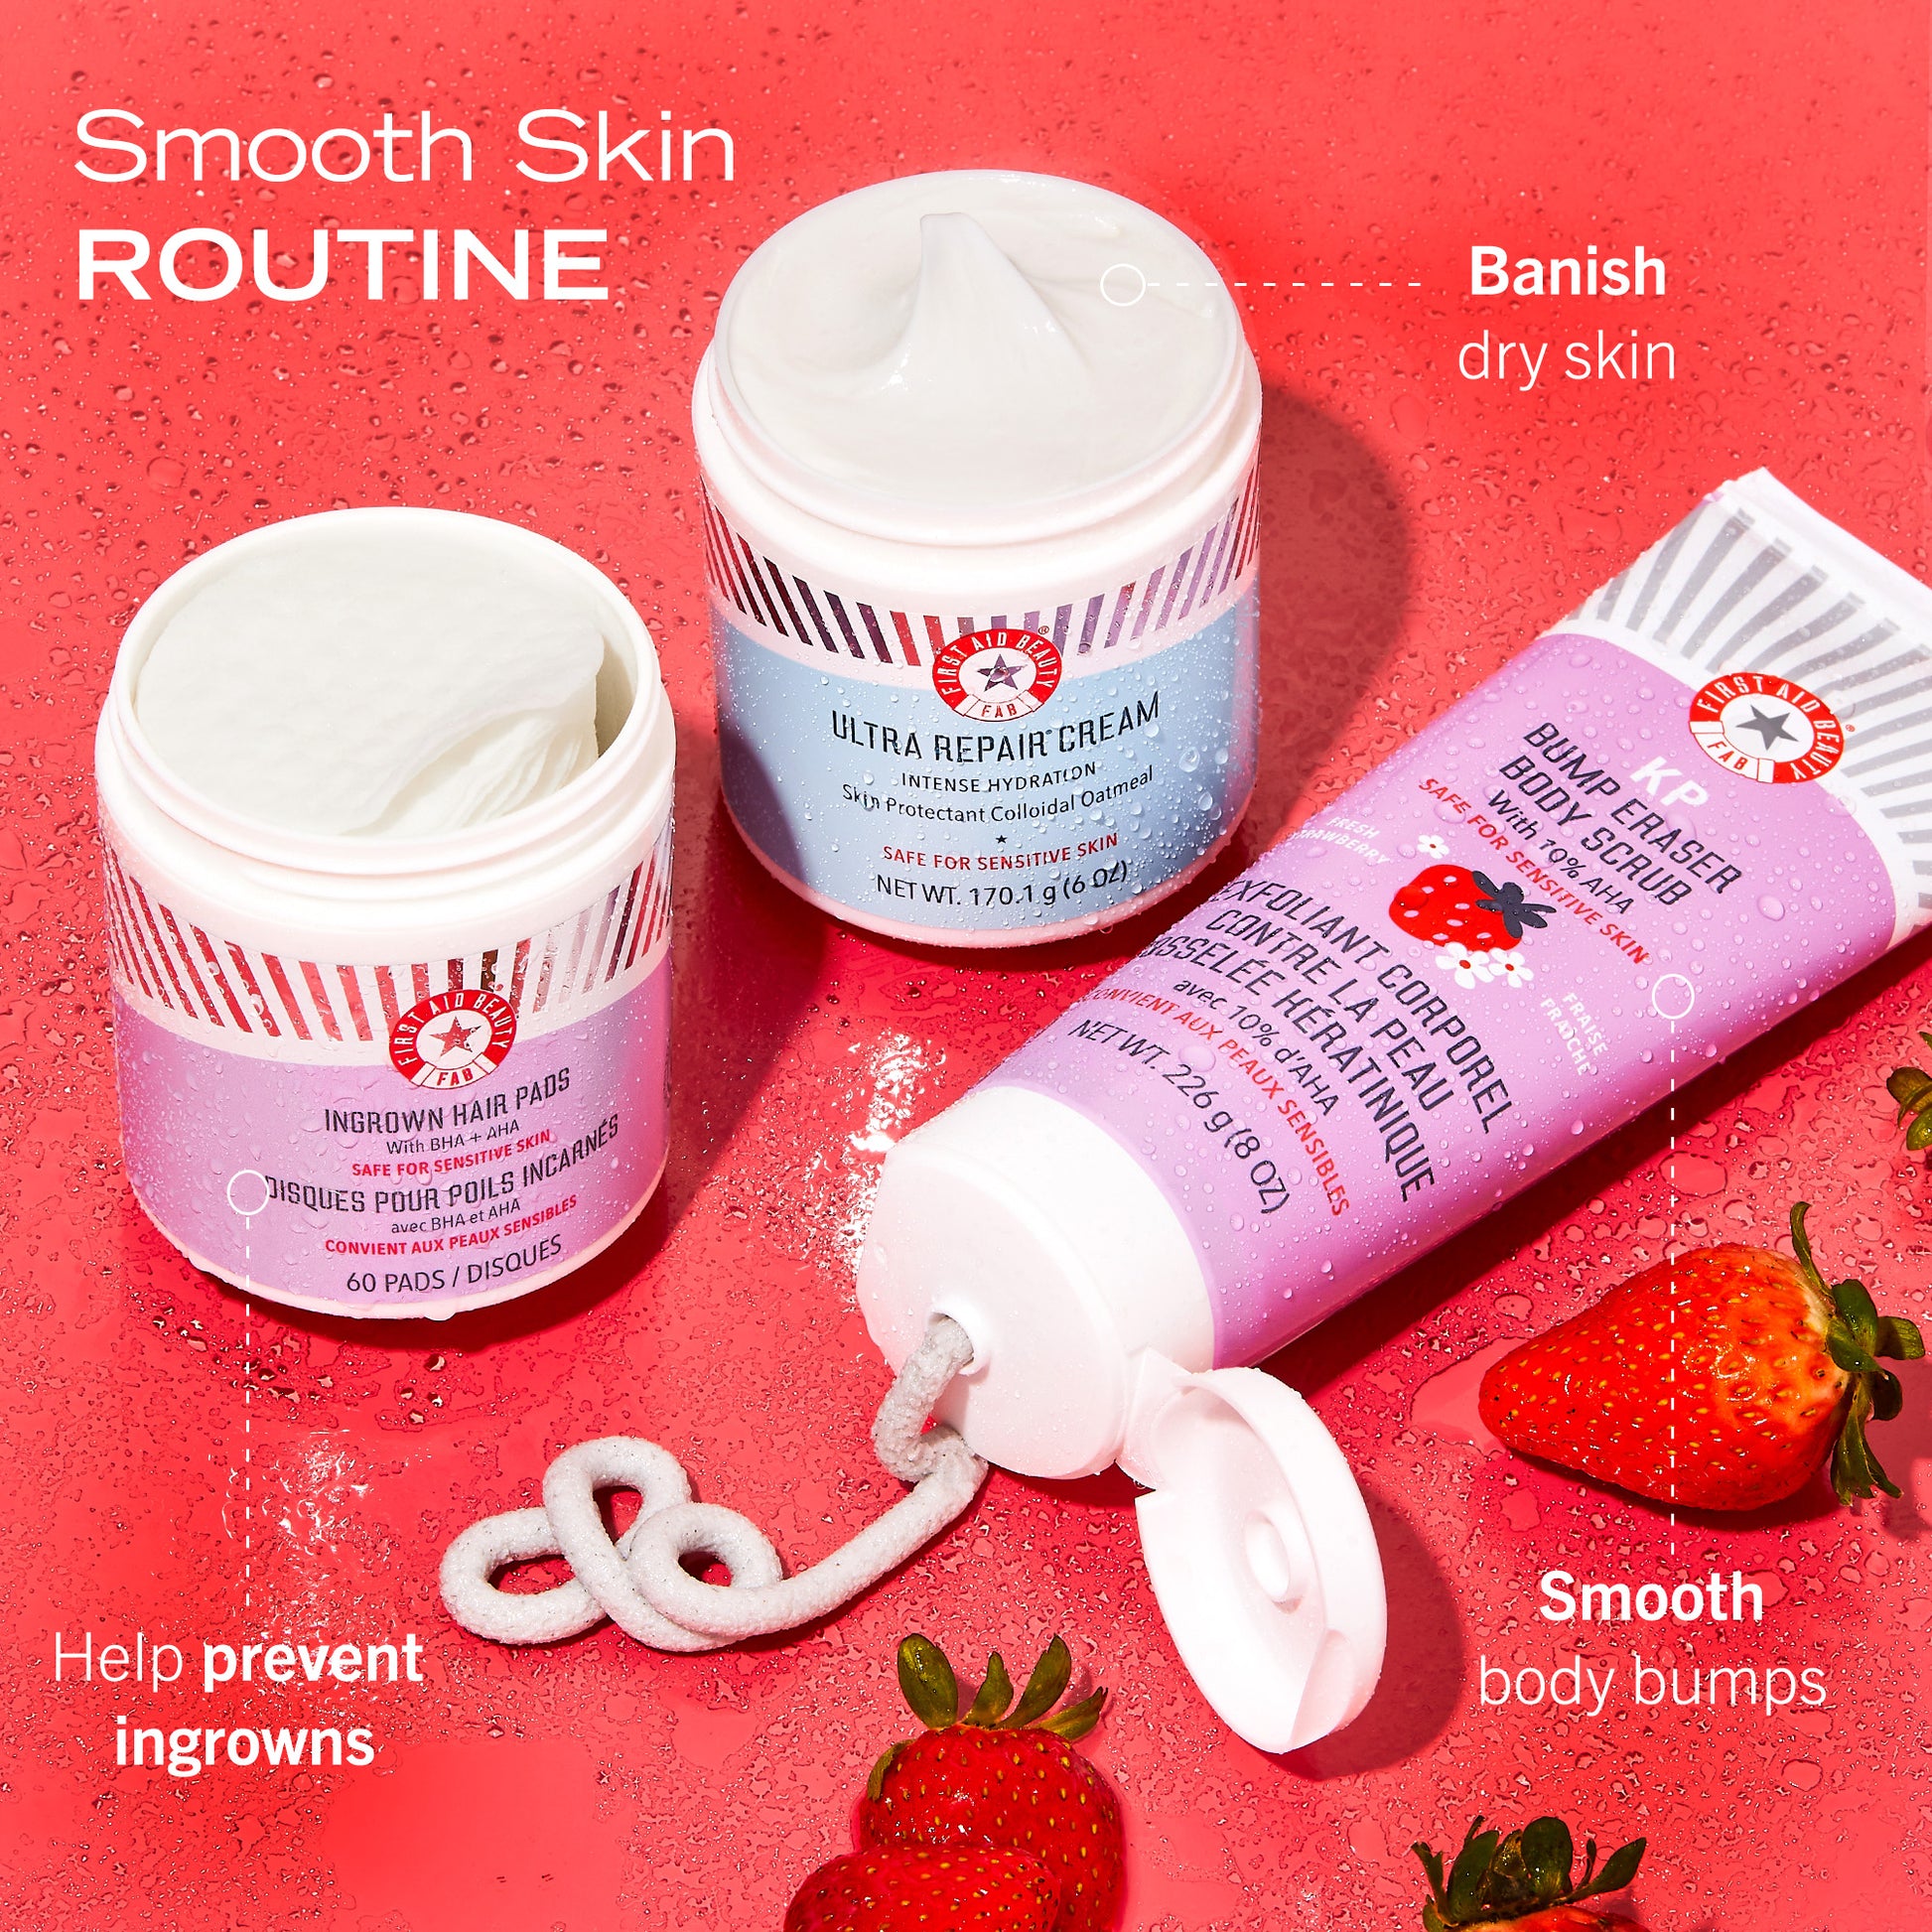 Smooth Skin Routine: Ingrown Hair Pads: Help prevent ingrowns.  Ultra Repair Cream: Banish dry skin.  KP Bump Eraser Body Scrub Fresh Strawberry: Smooth body bumps.